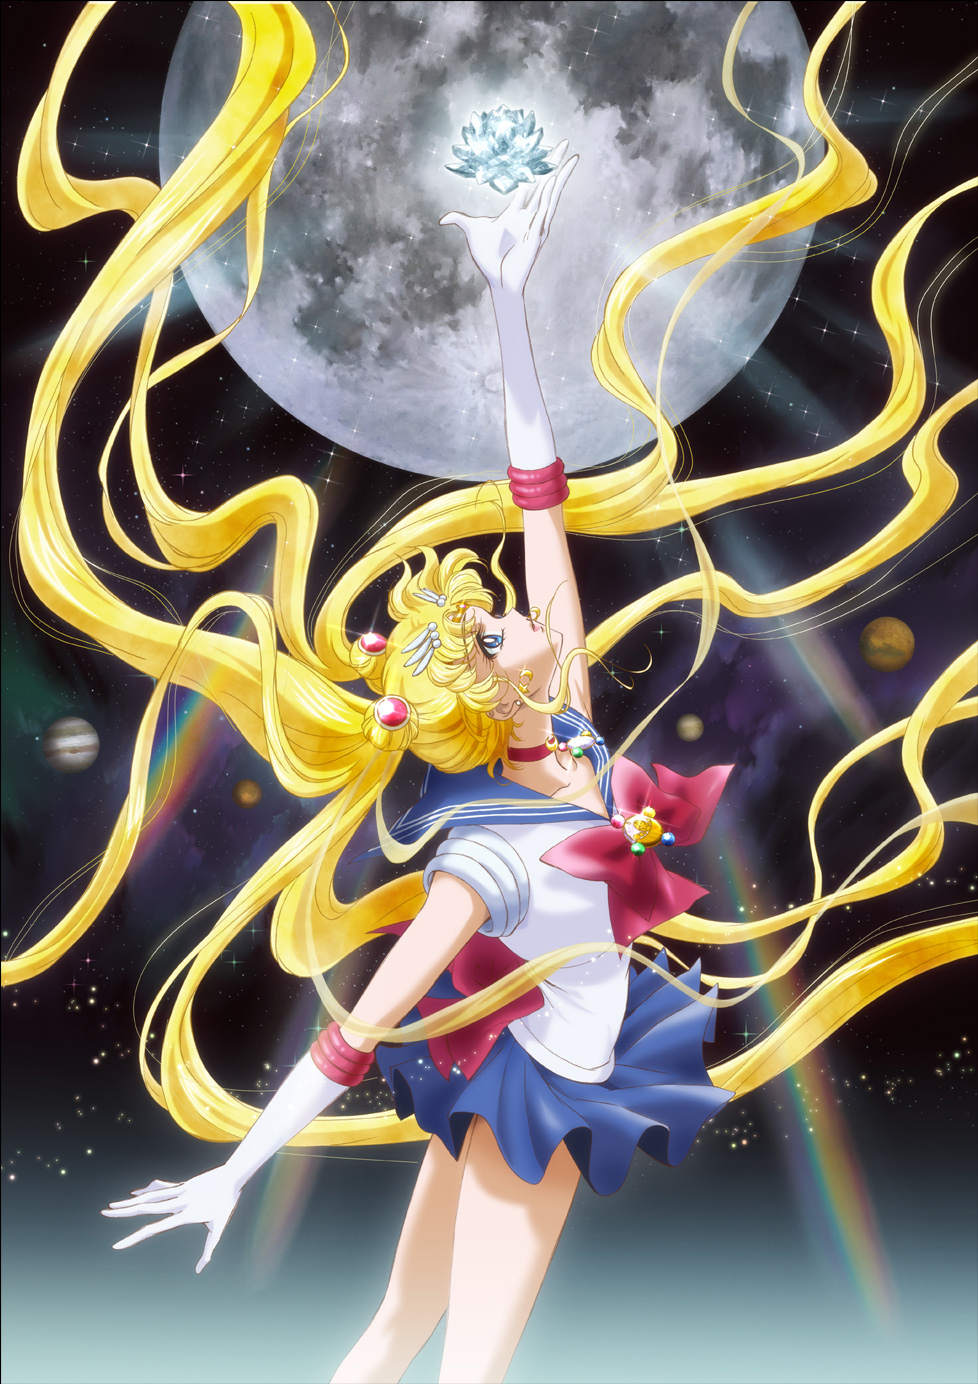 Online NHK poll ranks top 20 popular Sailor Moon charactersArab News Japan